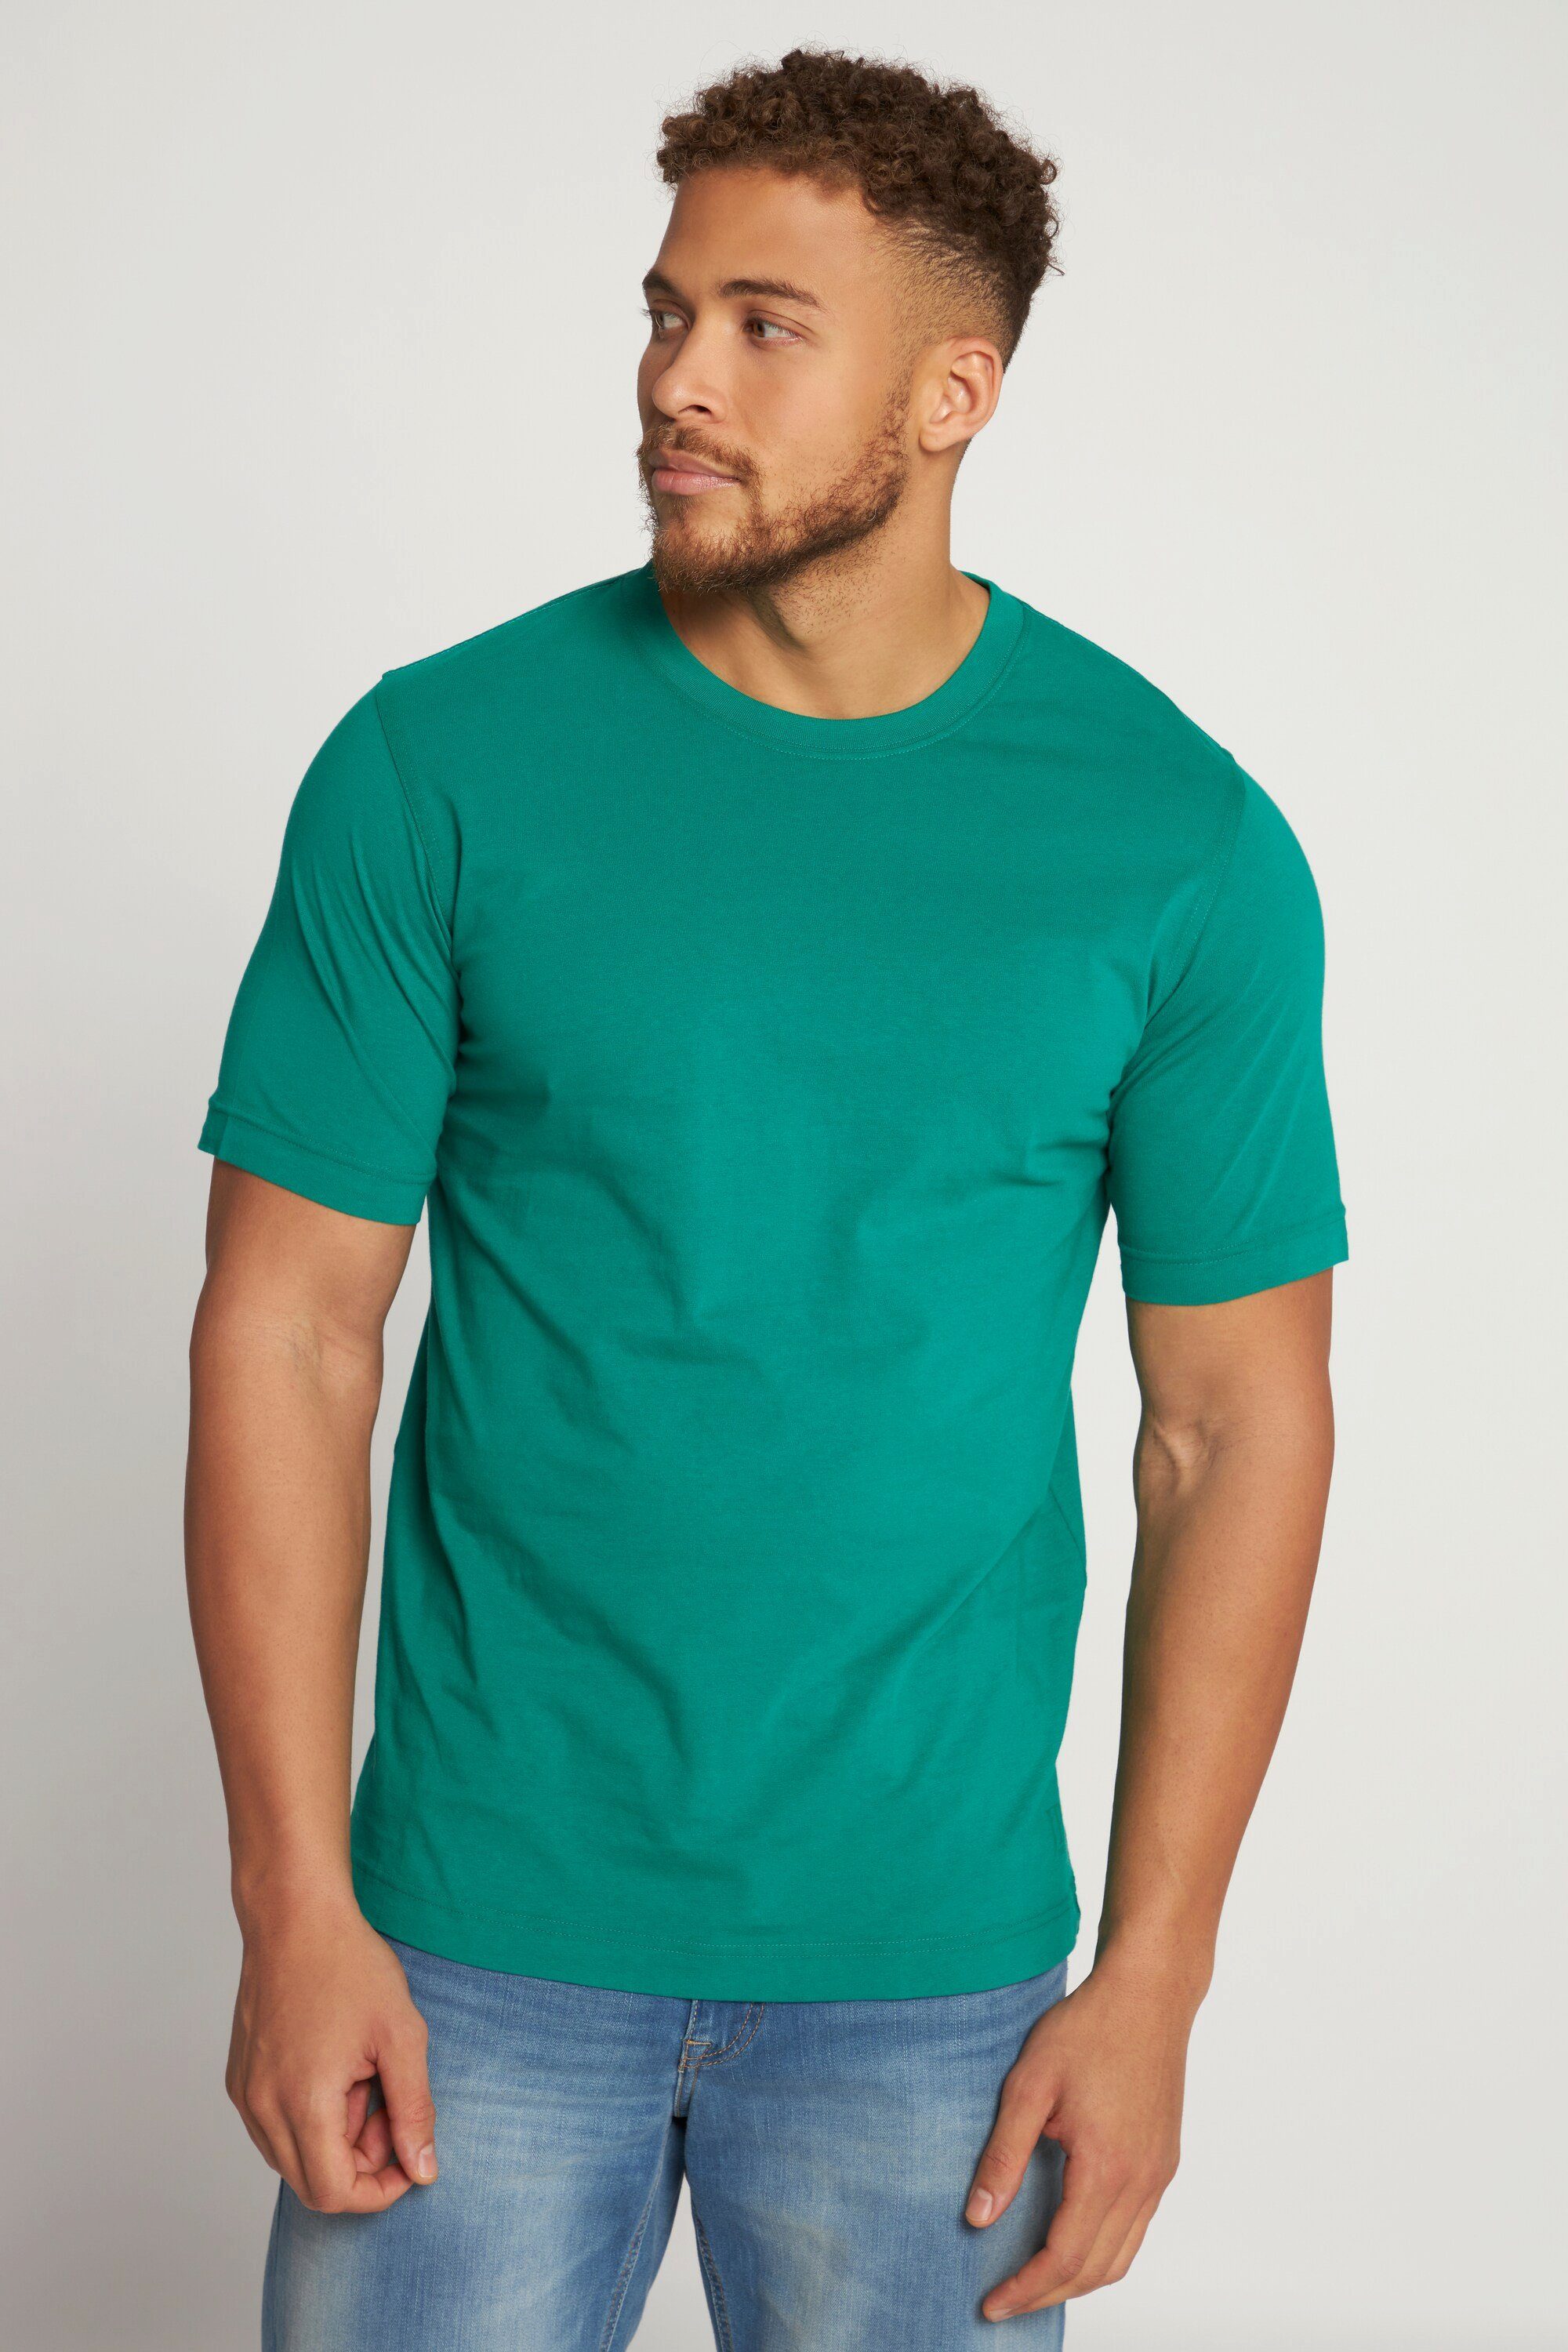 flaschengrün Baumwolle T-Shirt JP1880 gekämmte T-Shirt 8XL Rundhals bis Basic